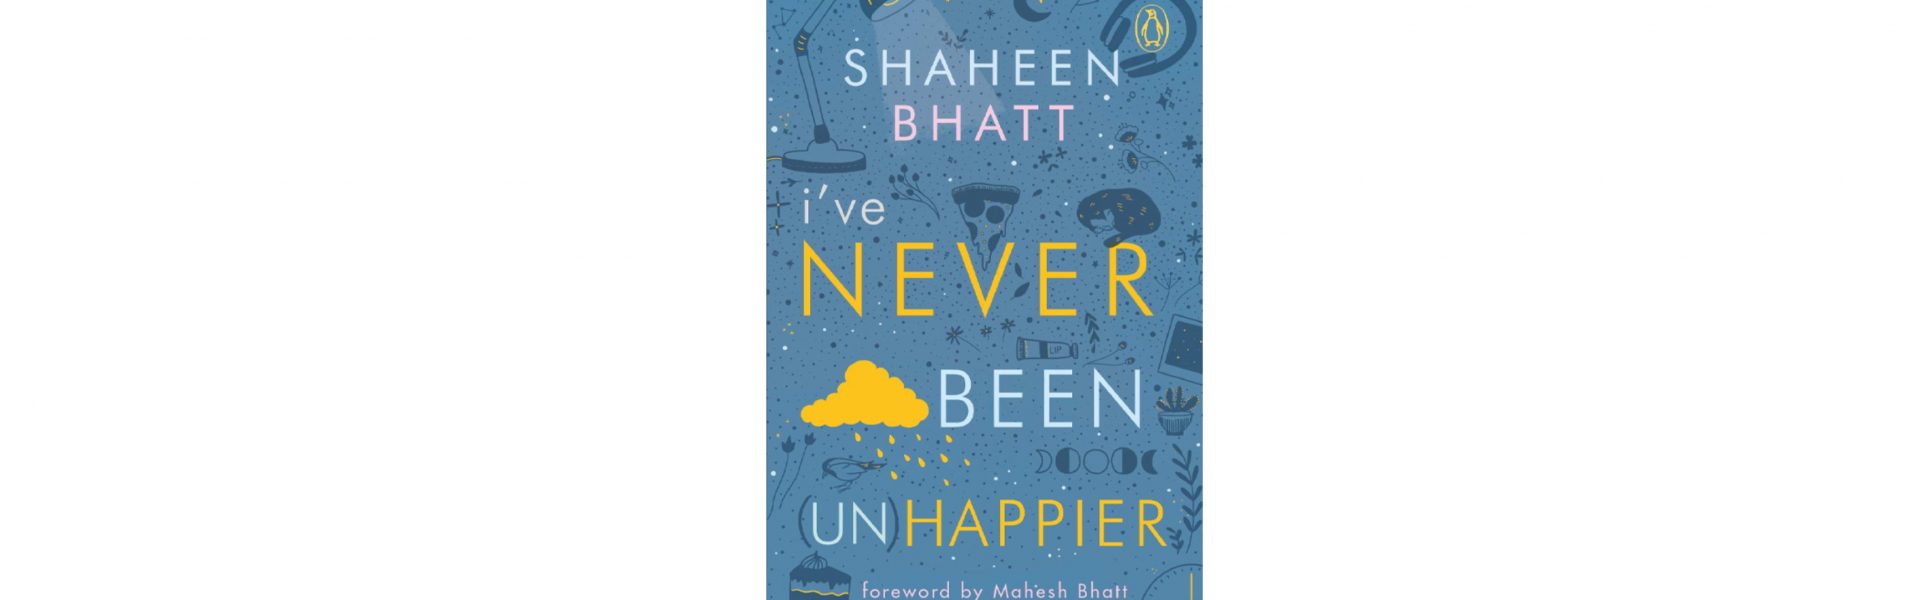 I’ve never been unhappier by Shaheen Bhatt